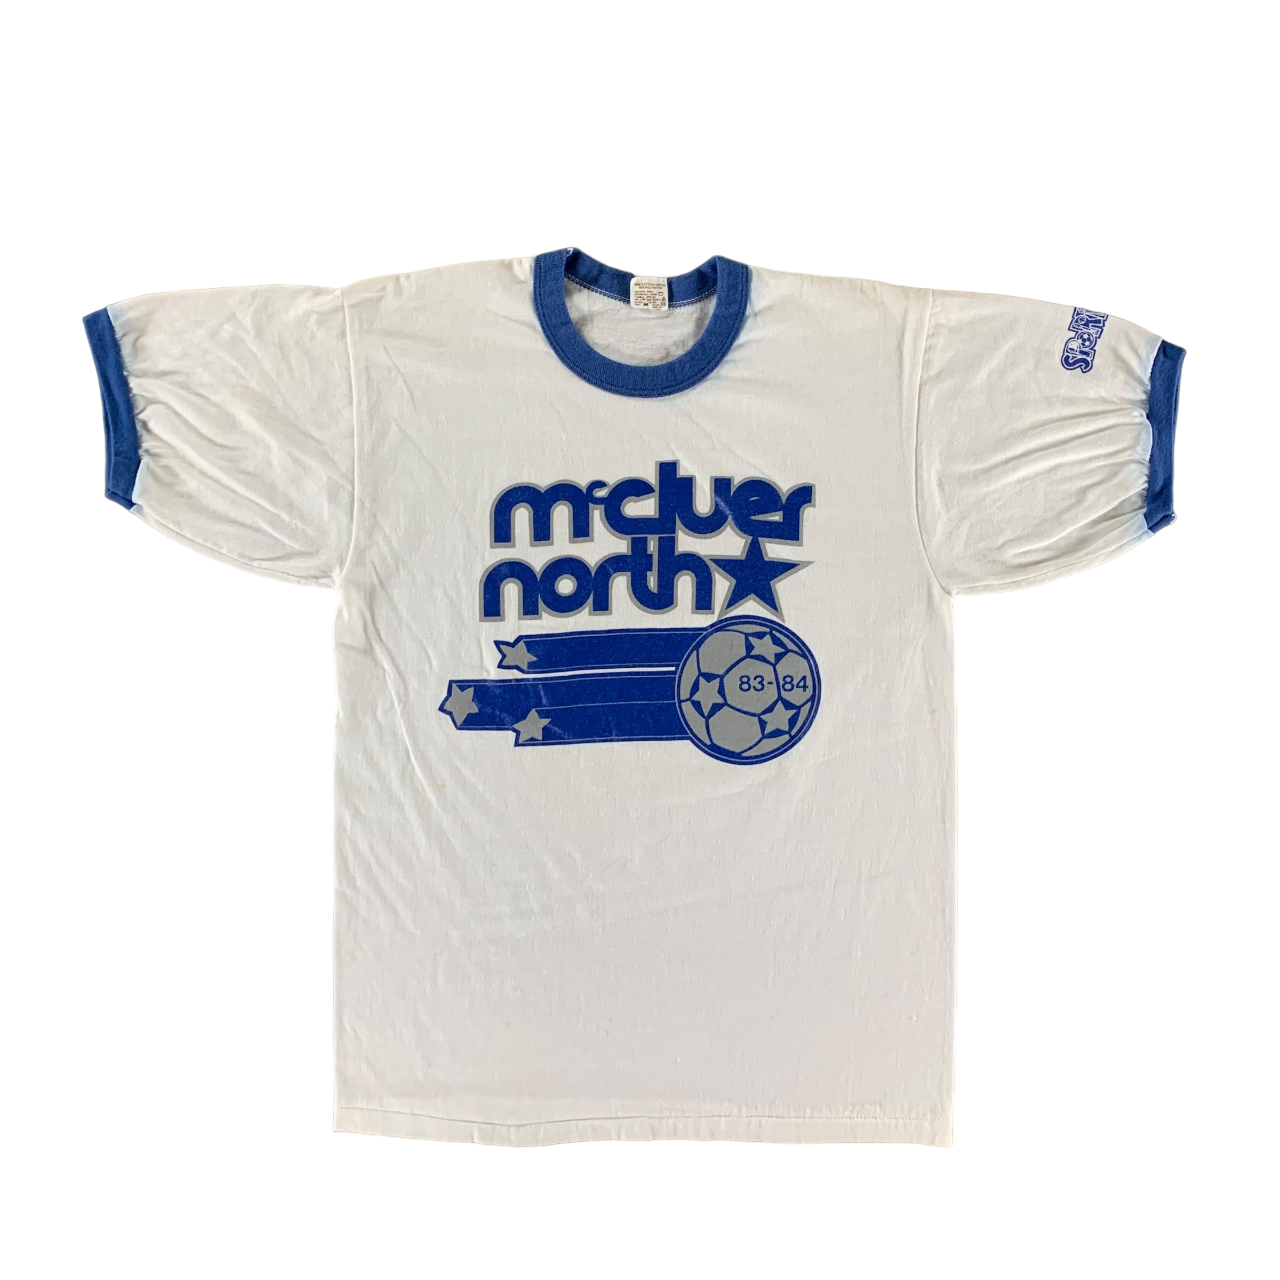 Vintage 1984 Soccer T-shirt size Medium